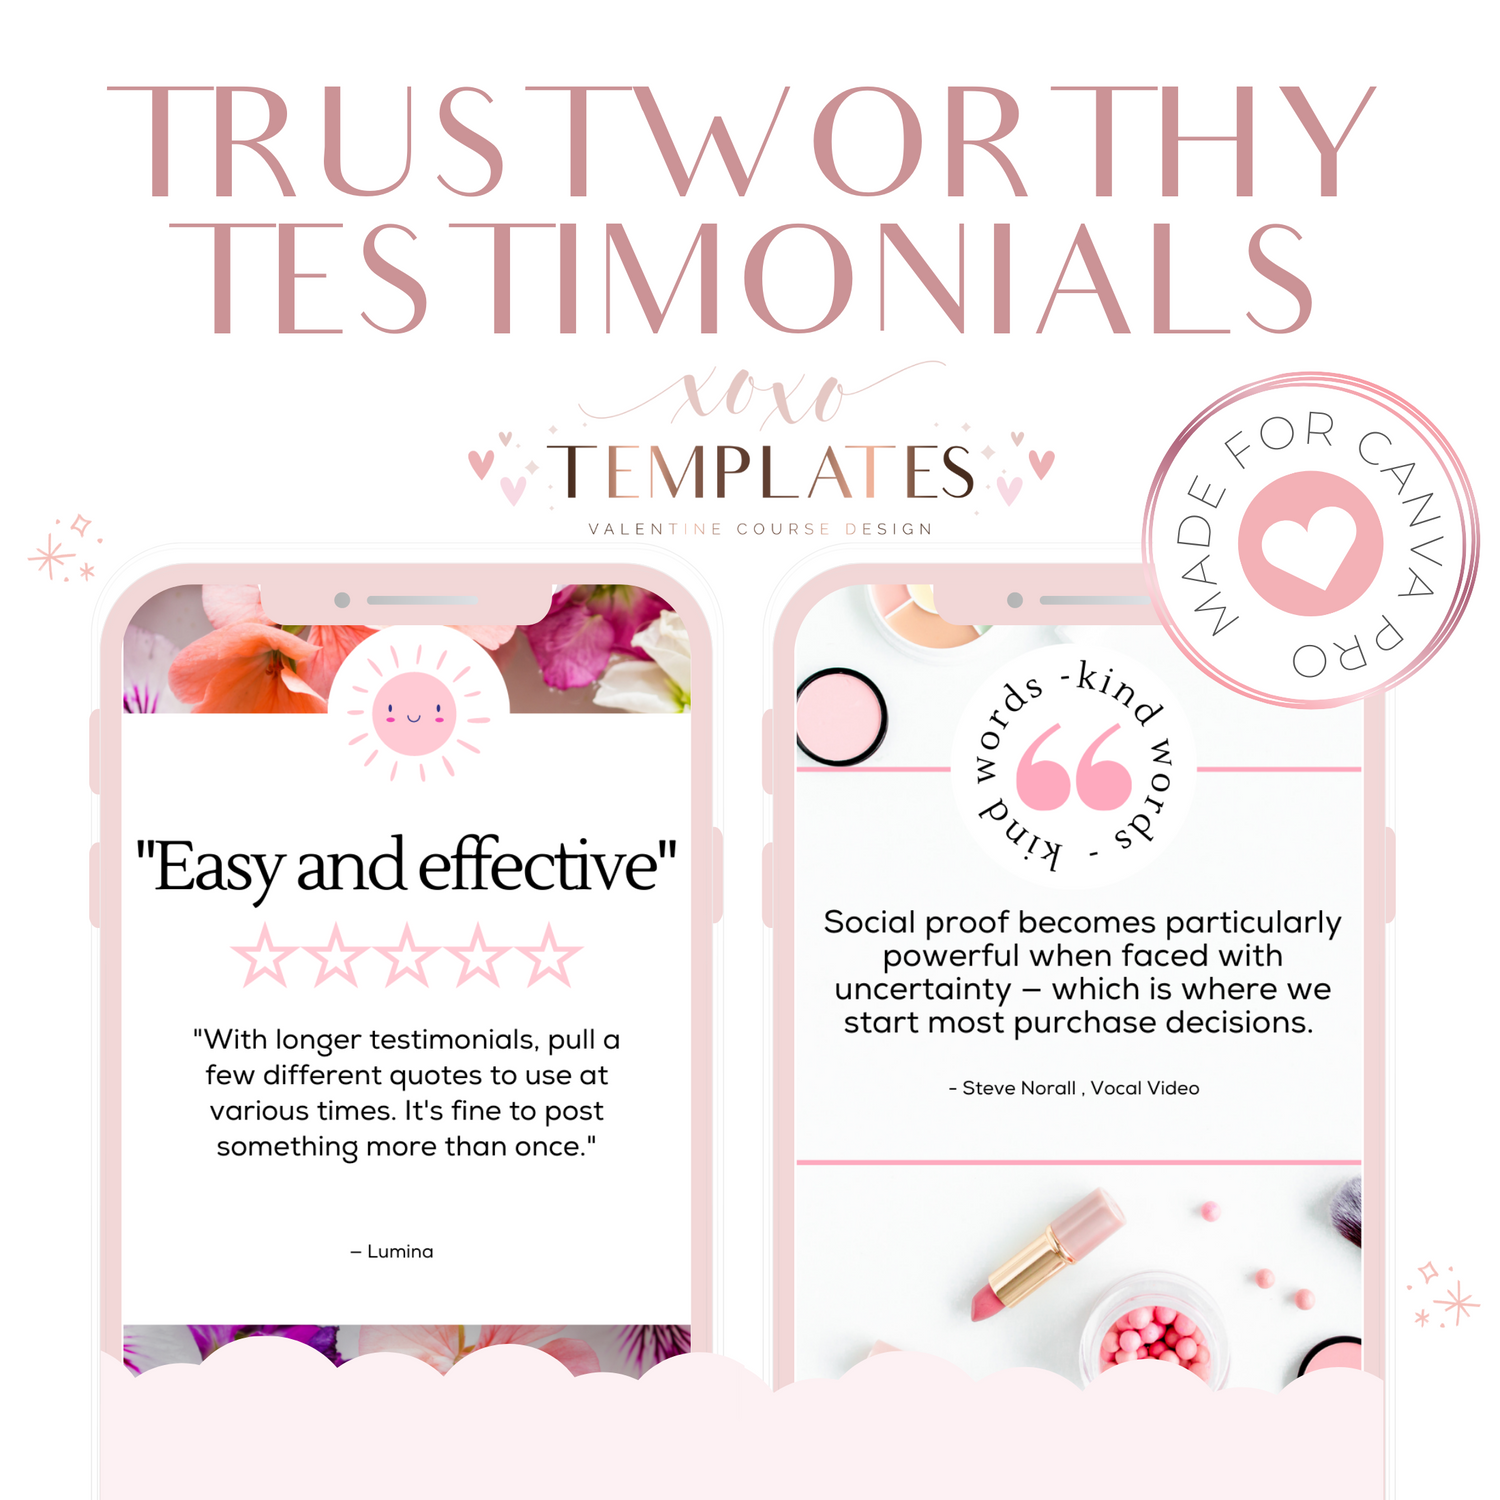 Trustworthy Testimonial Templates